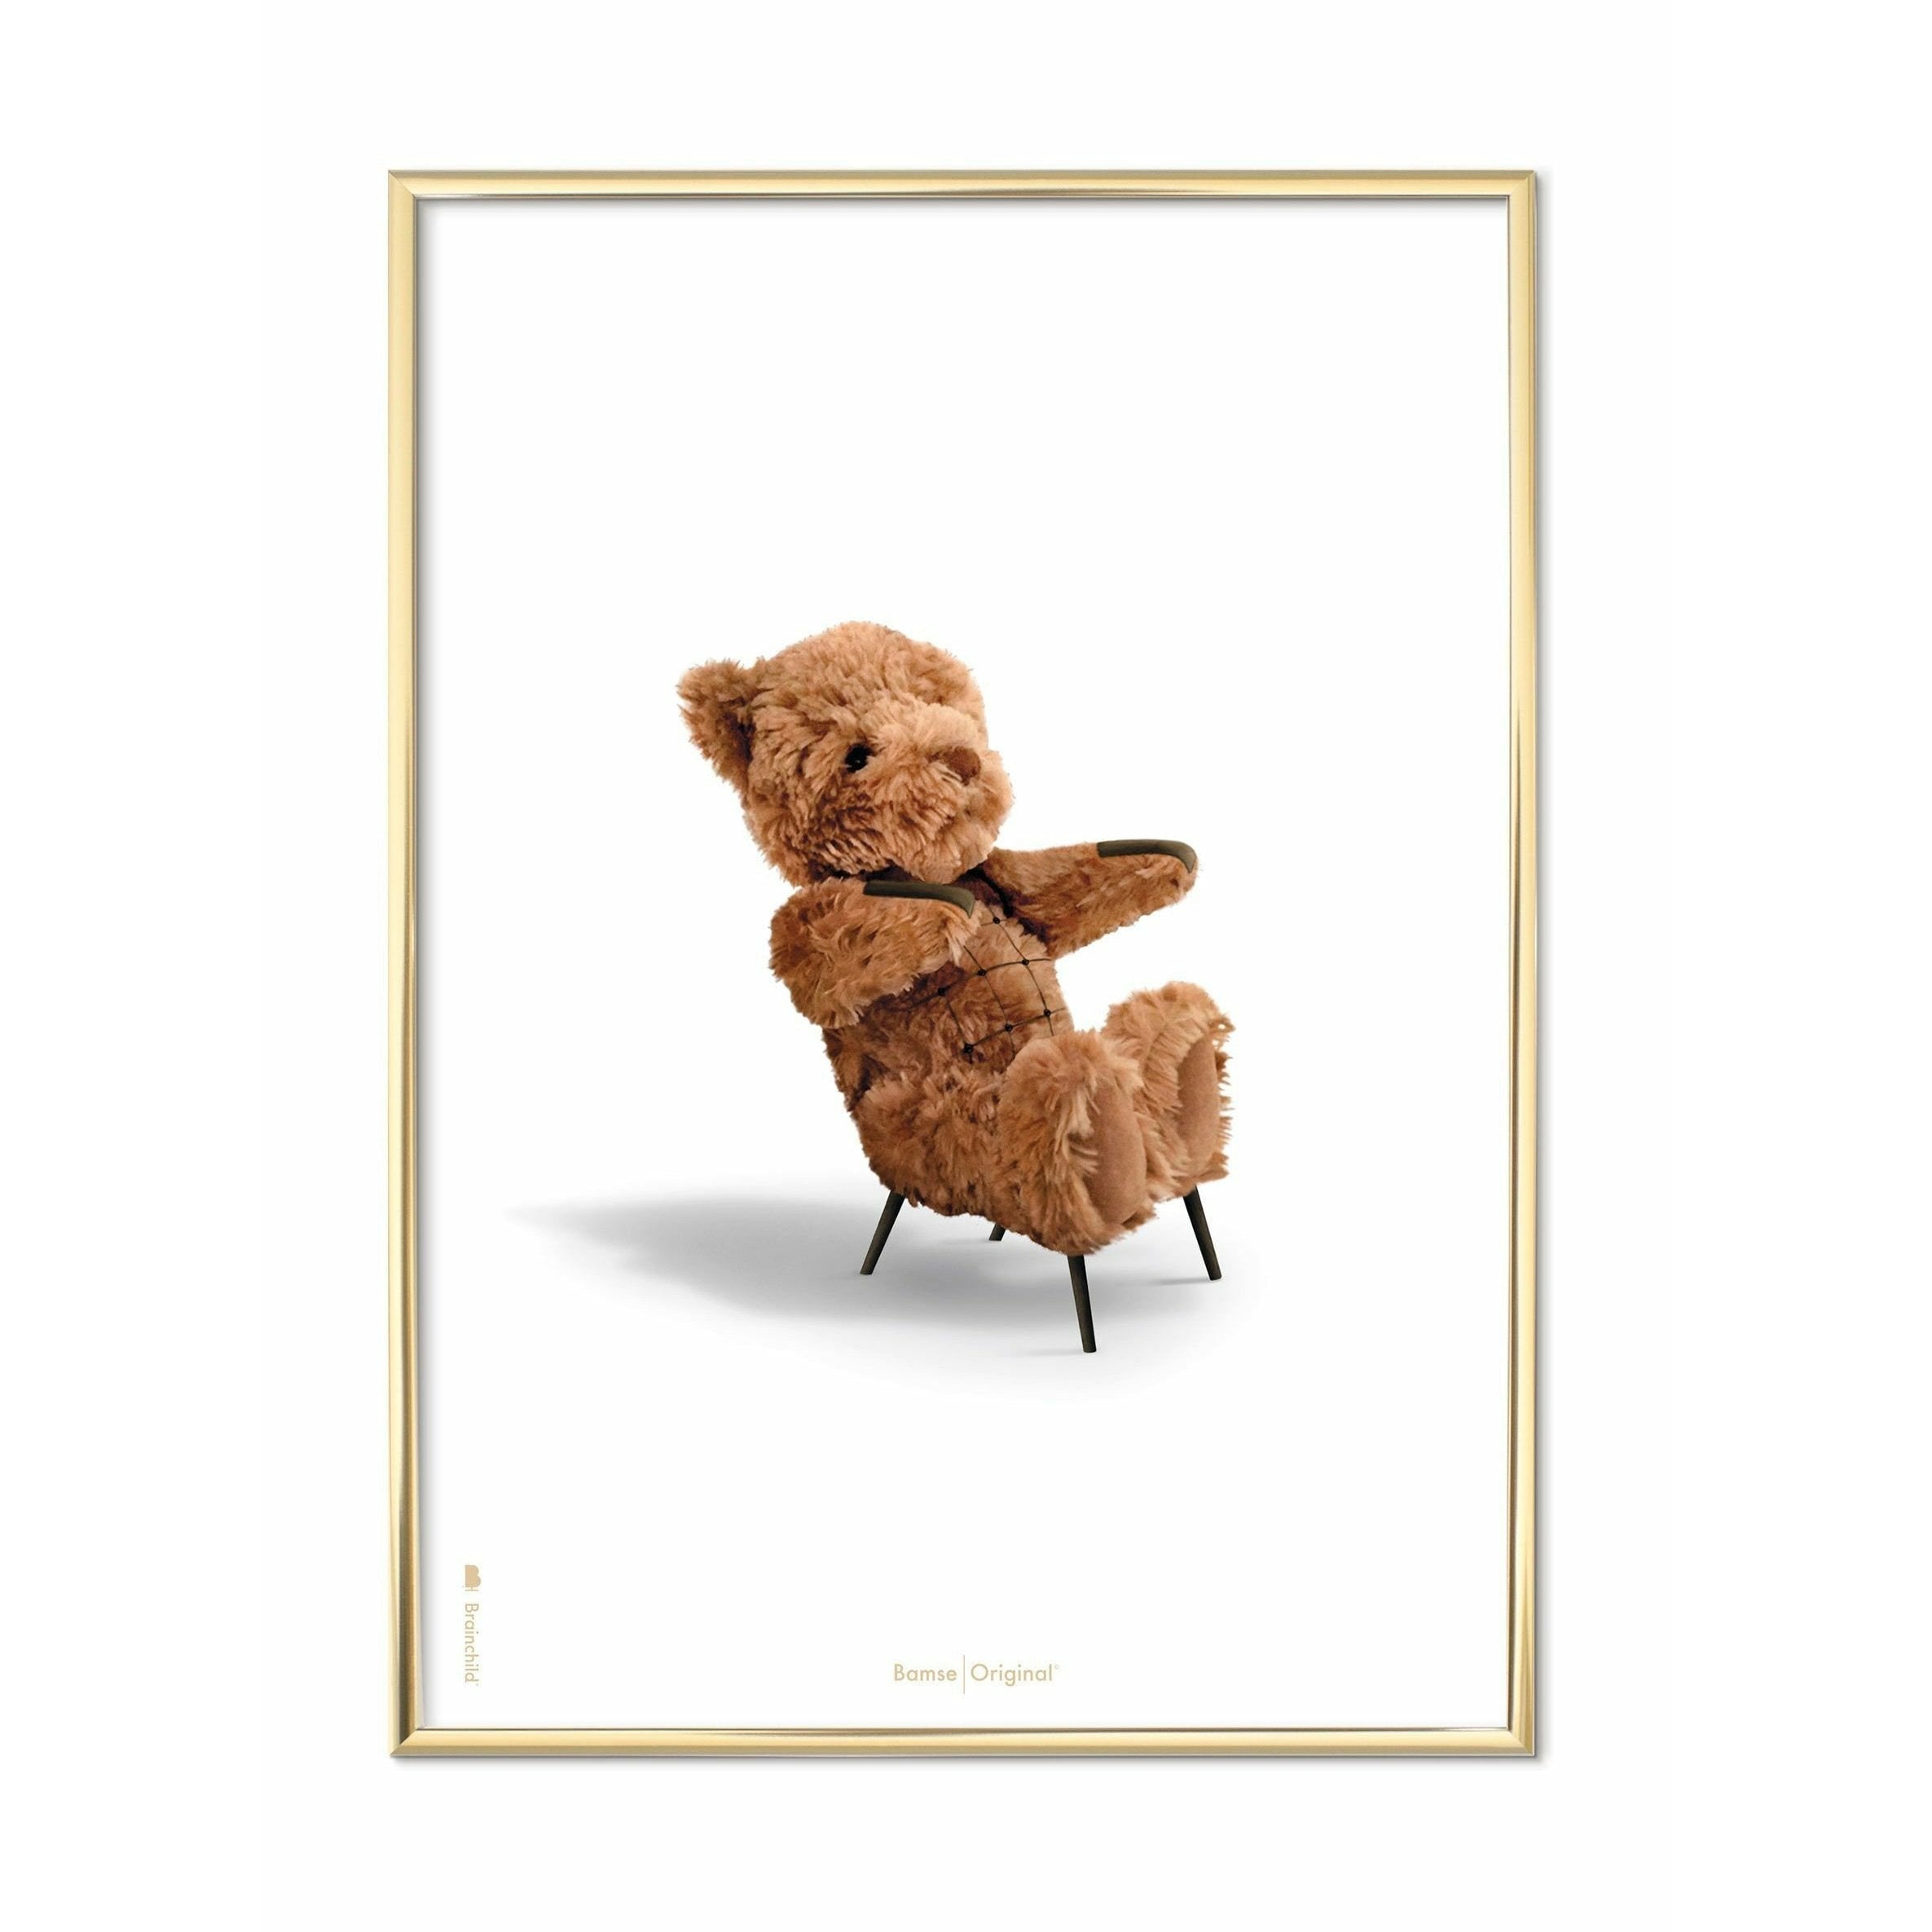 Brainchild Teddy Bear Classic Poster, Brass Colored Frame 30x40 Cm, White Background